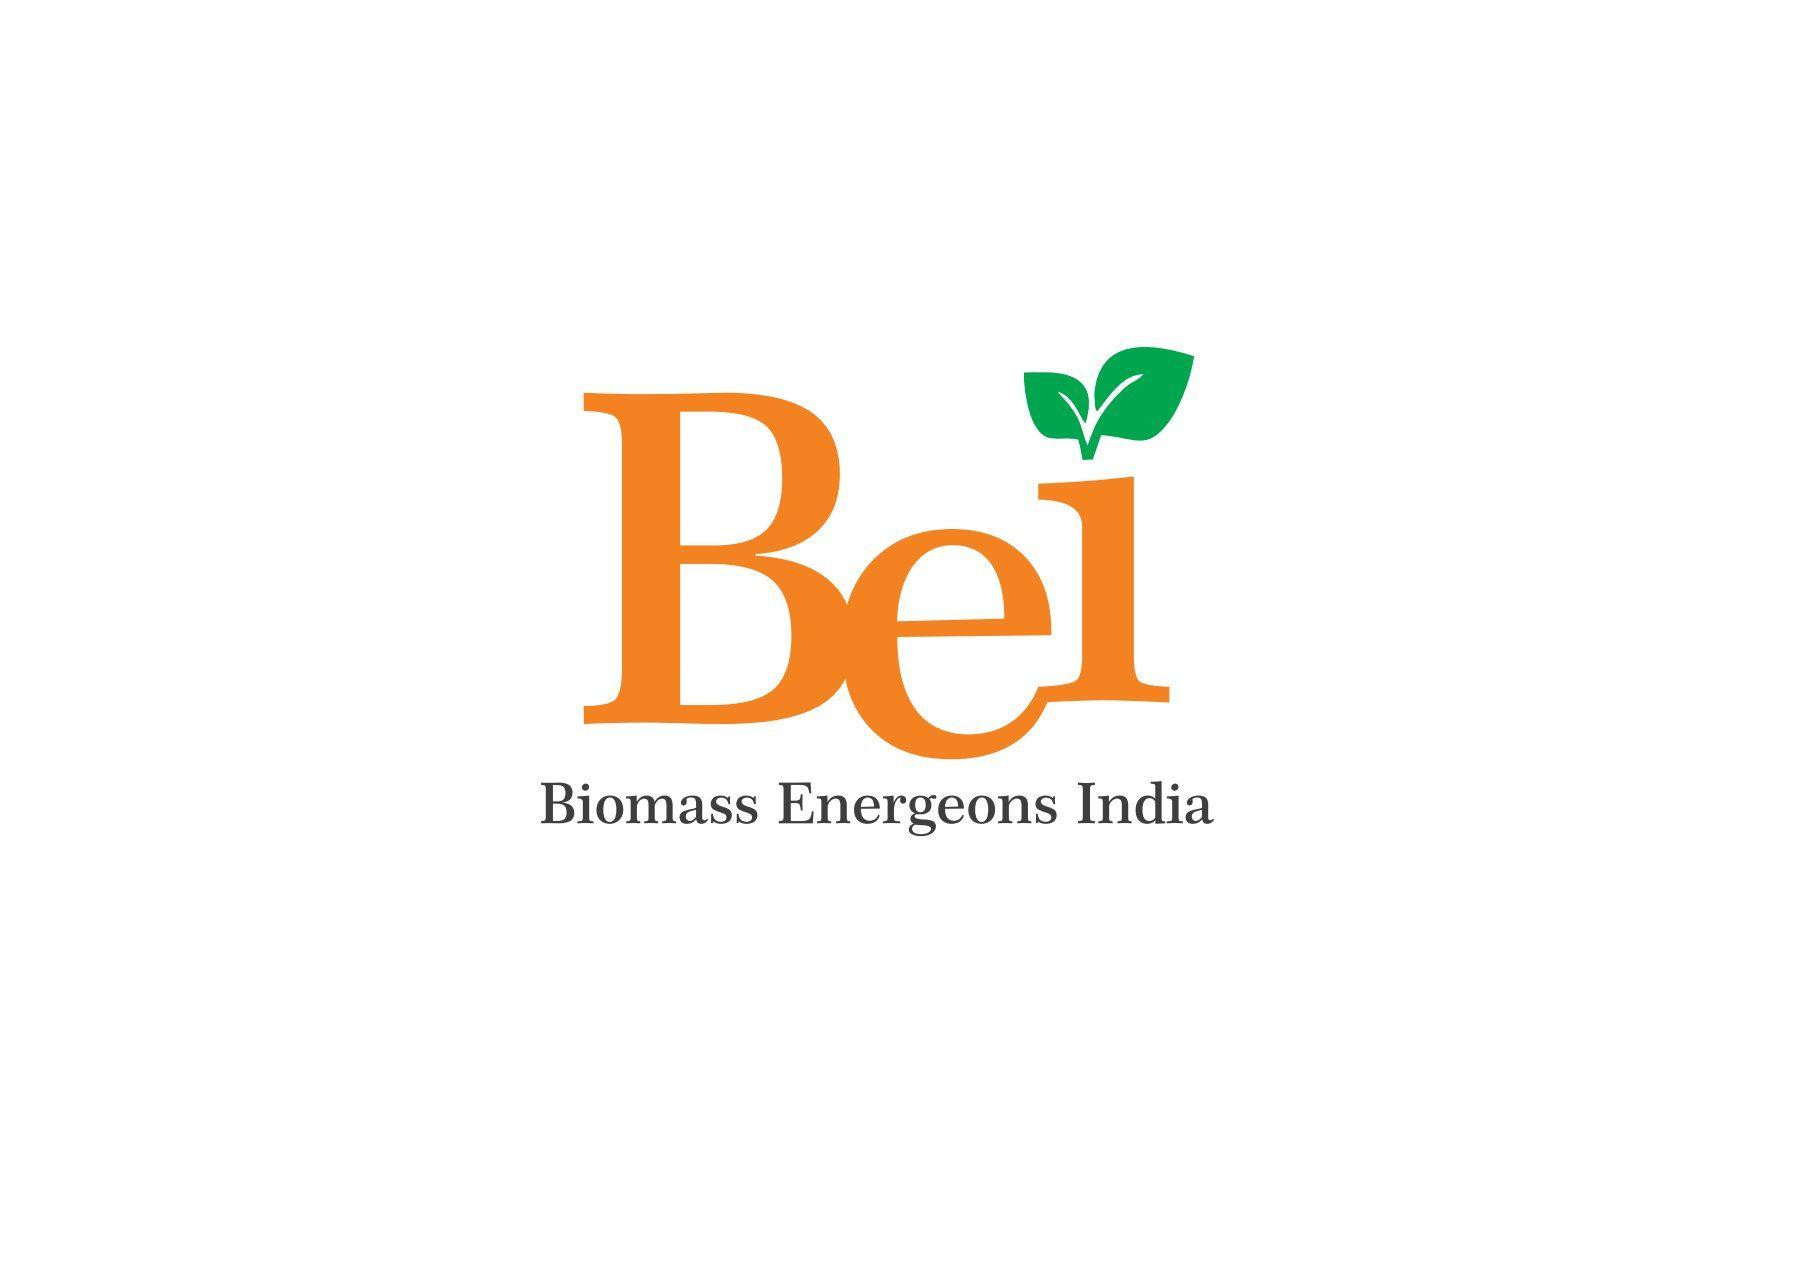 BIOMASS ENERGEONS INDIA